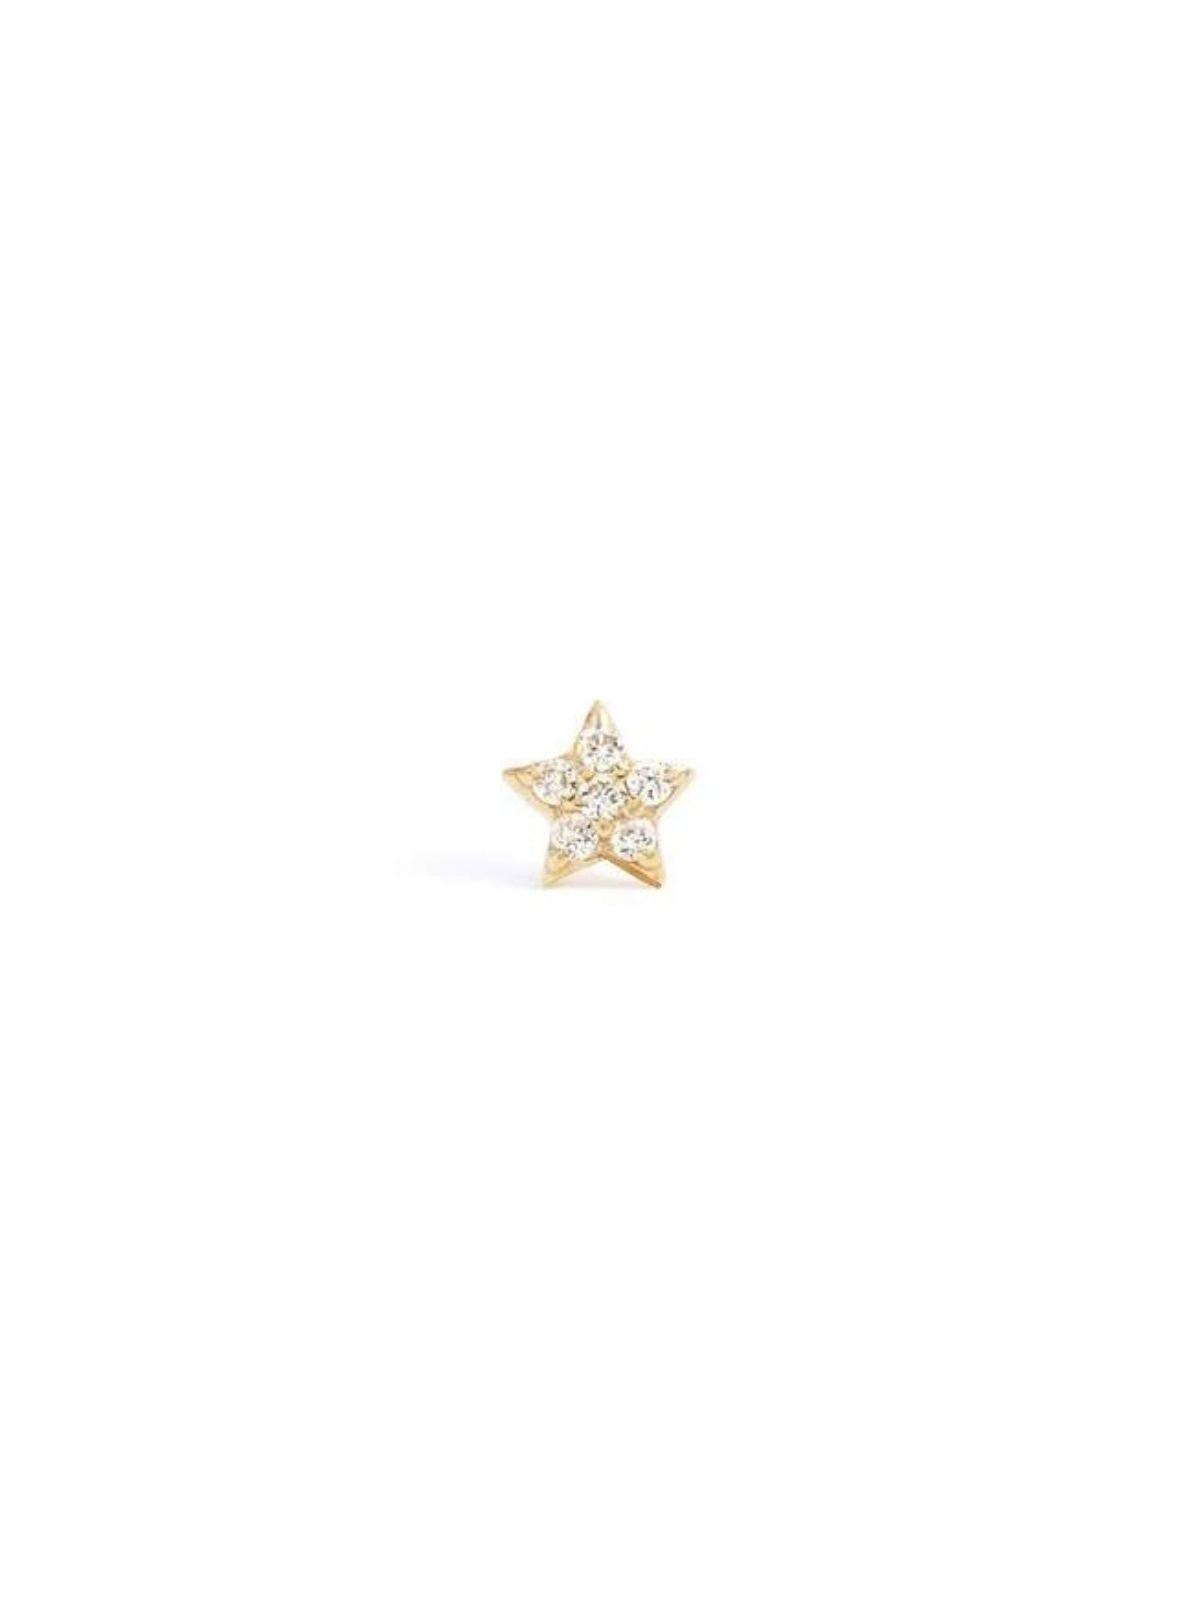 By Charlotte 14k Gold Venus Earrings - Single